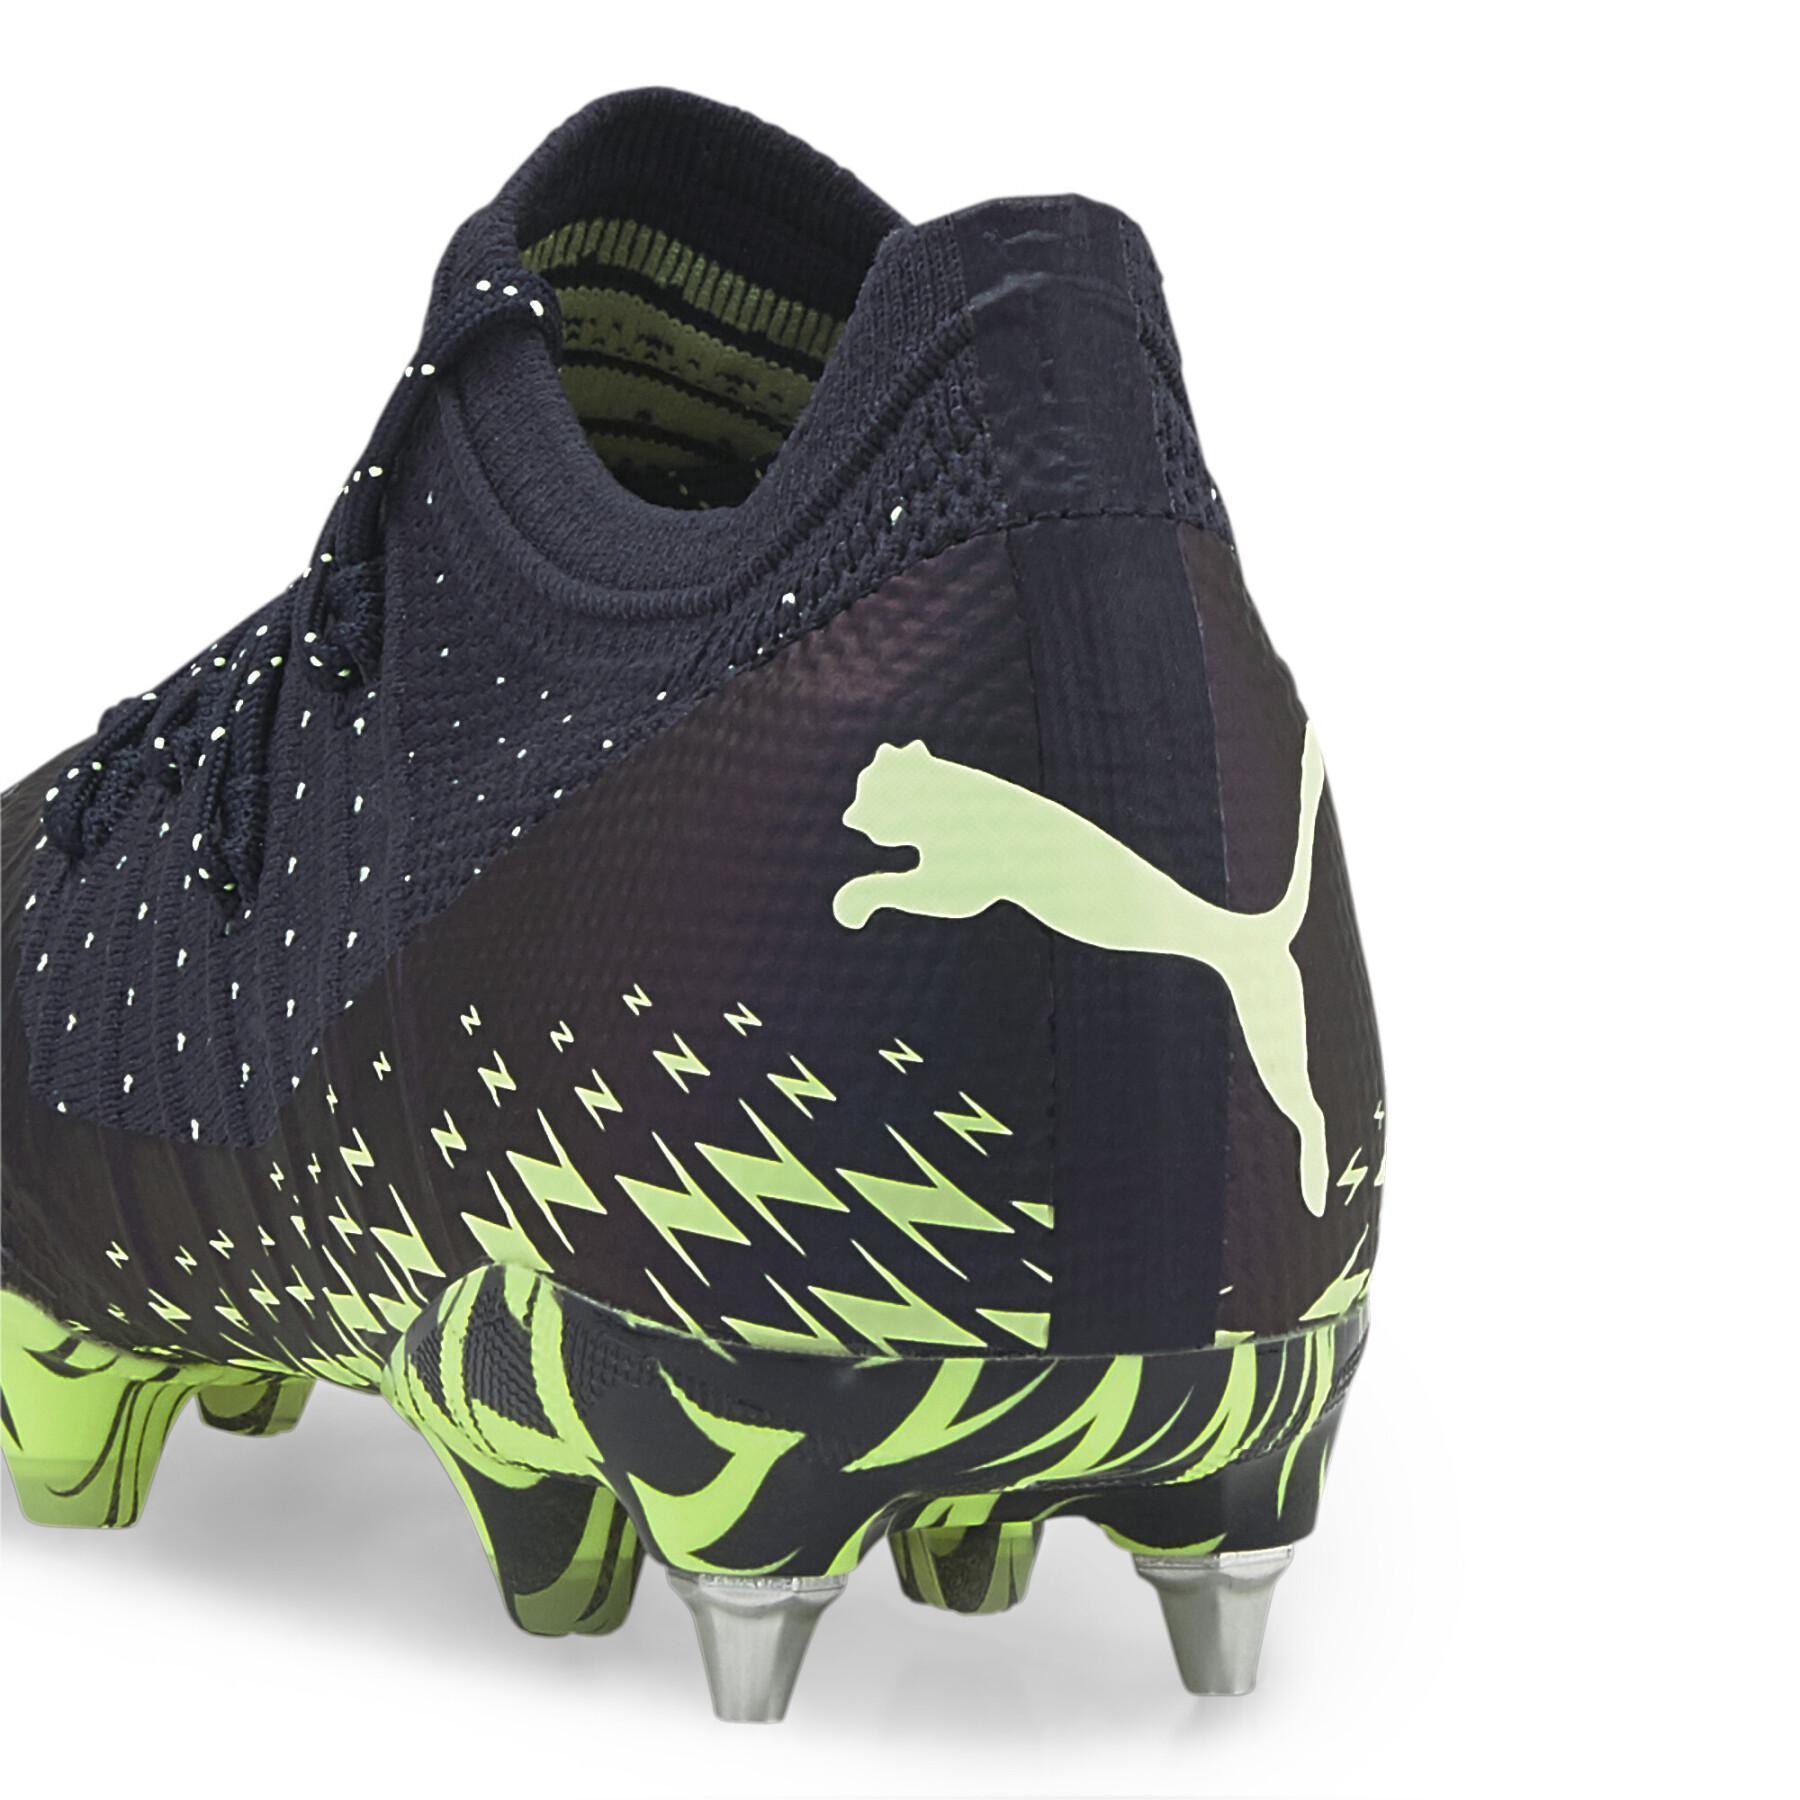 Chaussures de football Puma Future Z 1.4 MxSG - Fatest Pack